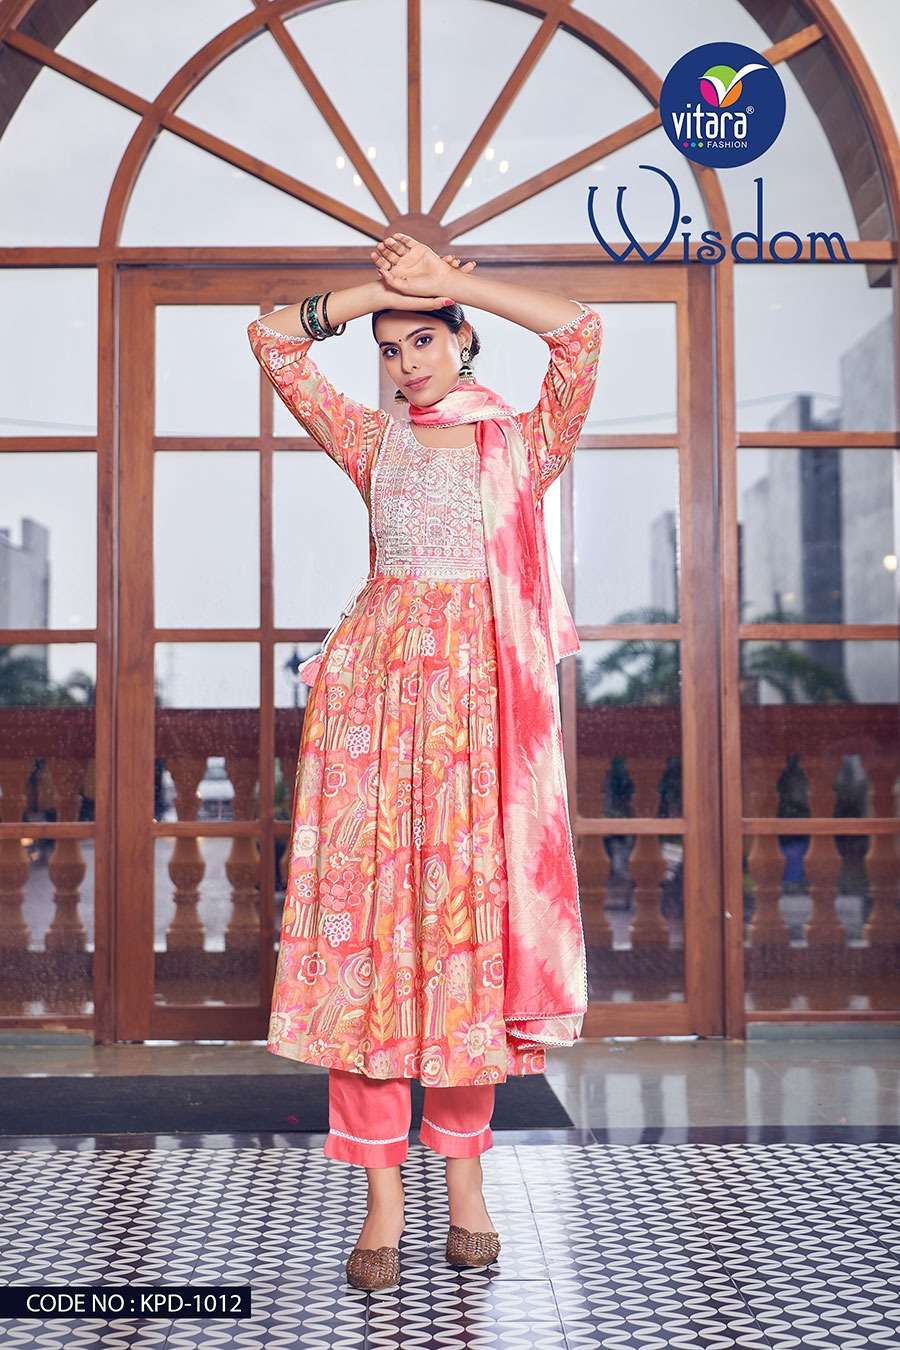 vitara fashion wisdom rayon gorgeous look top bottom with dupatta catalog